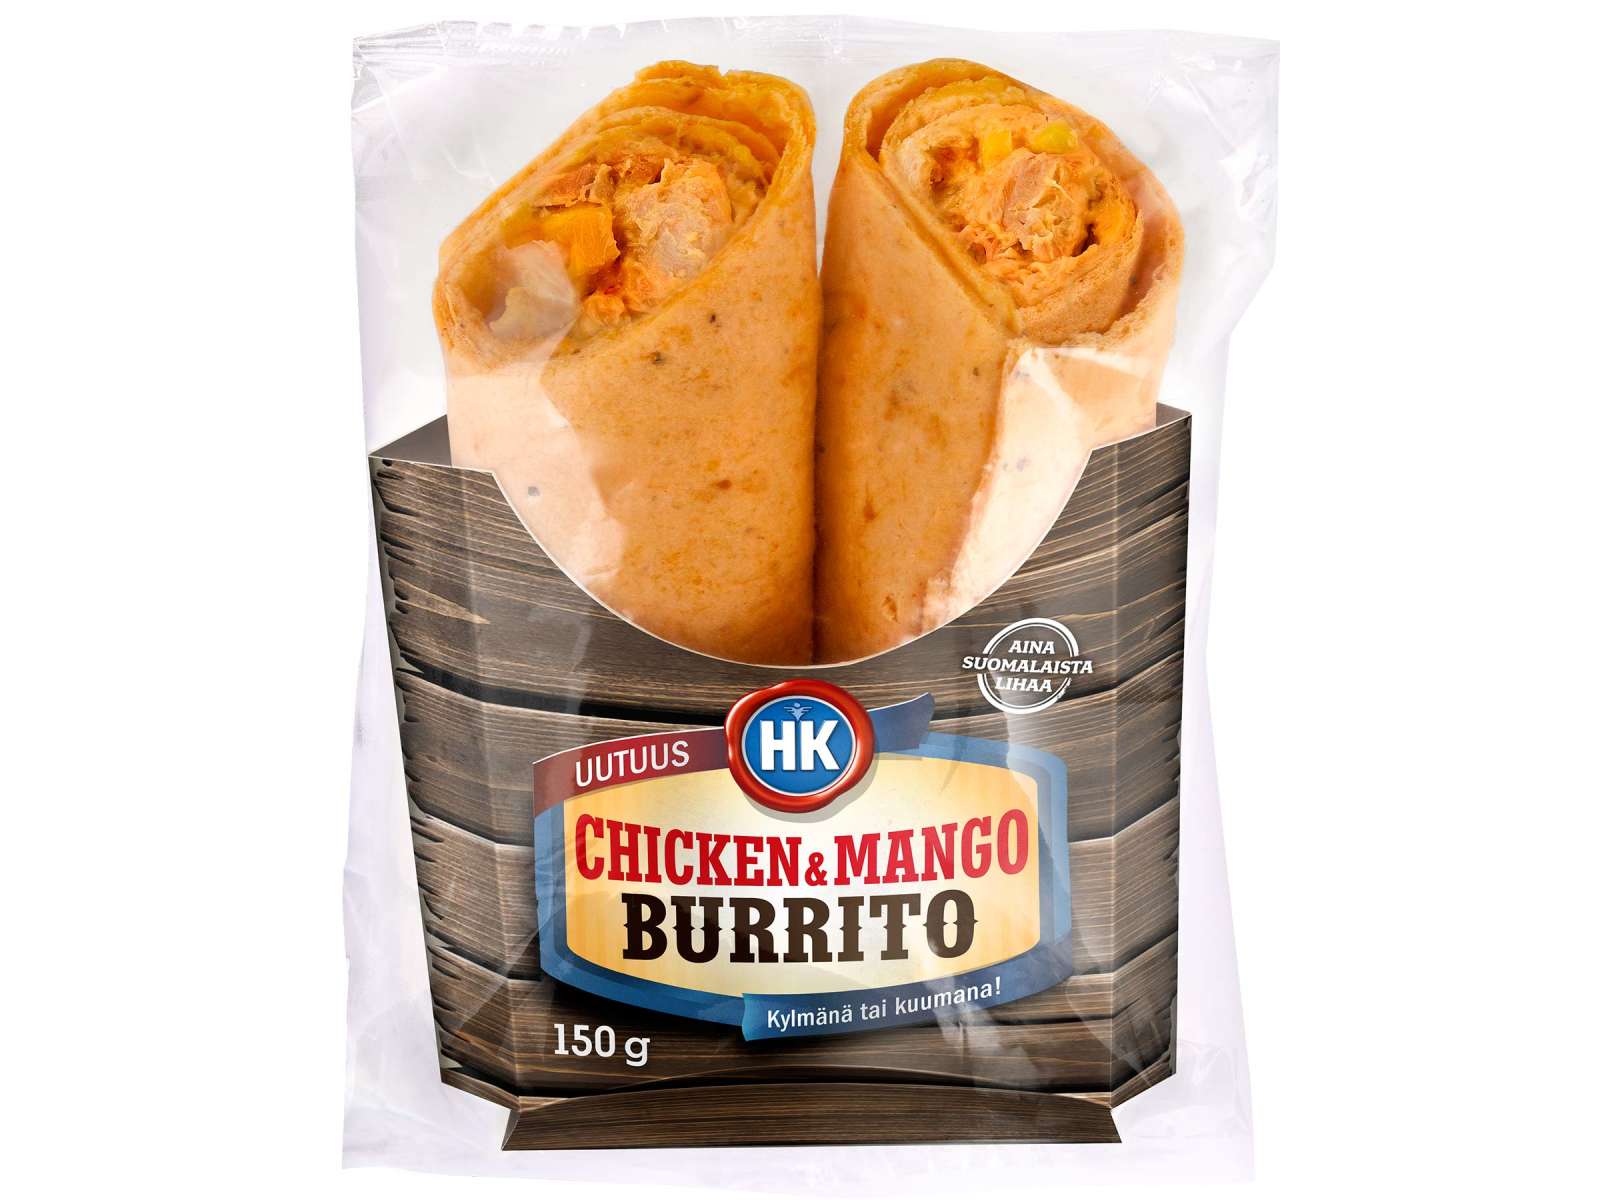 HK Chicken & mango burrito